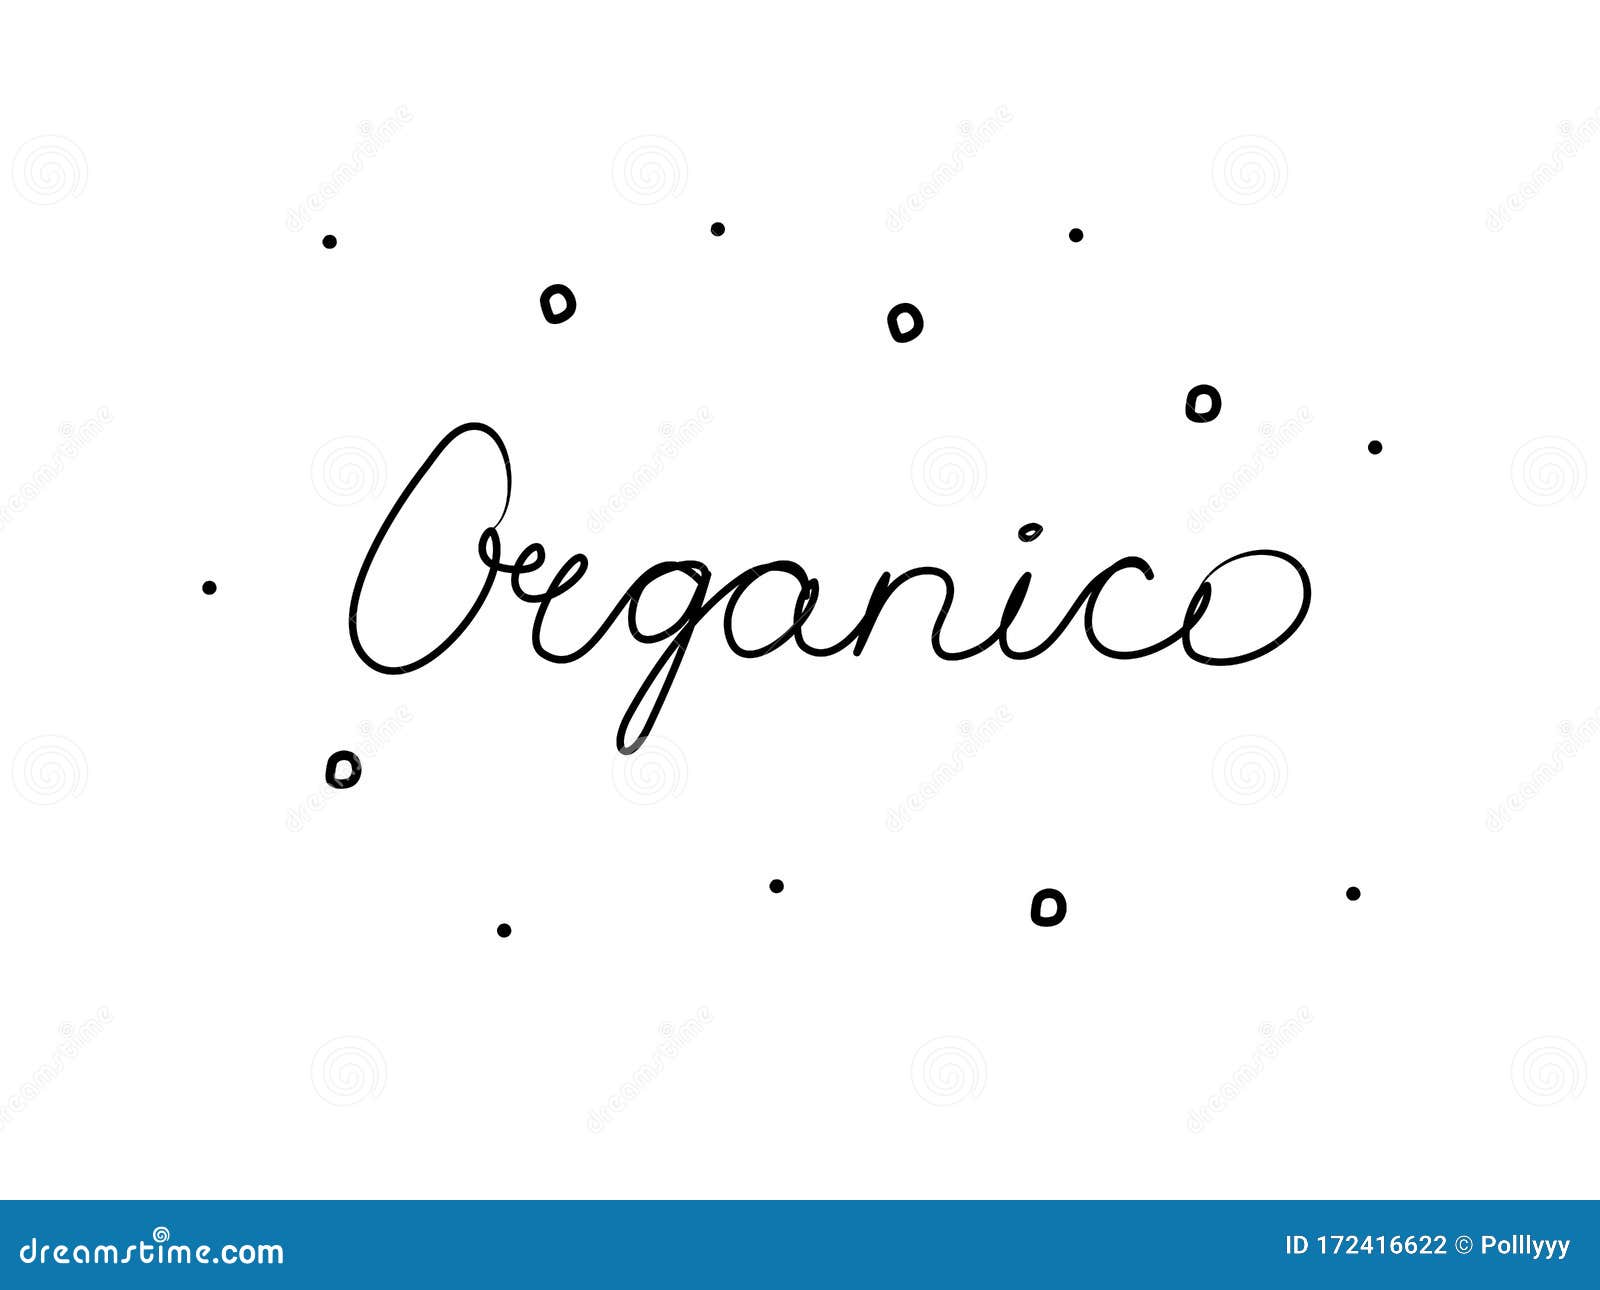 organico phrase handwritten with a calligraphy brush. organic in spanish. modern brush calligraphy.  word black